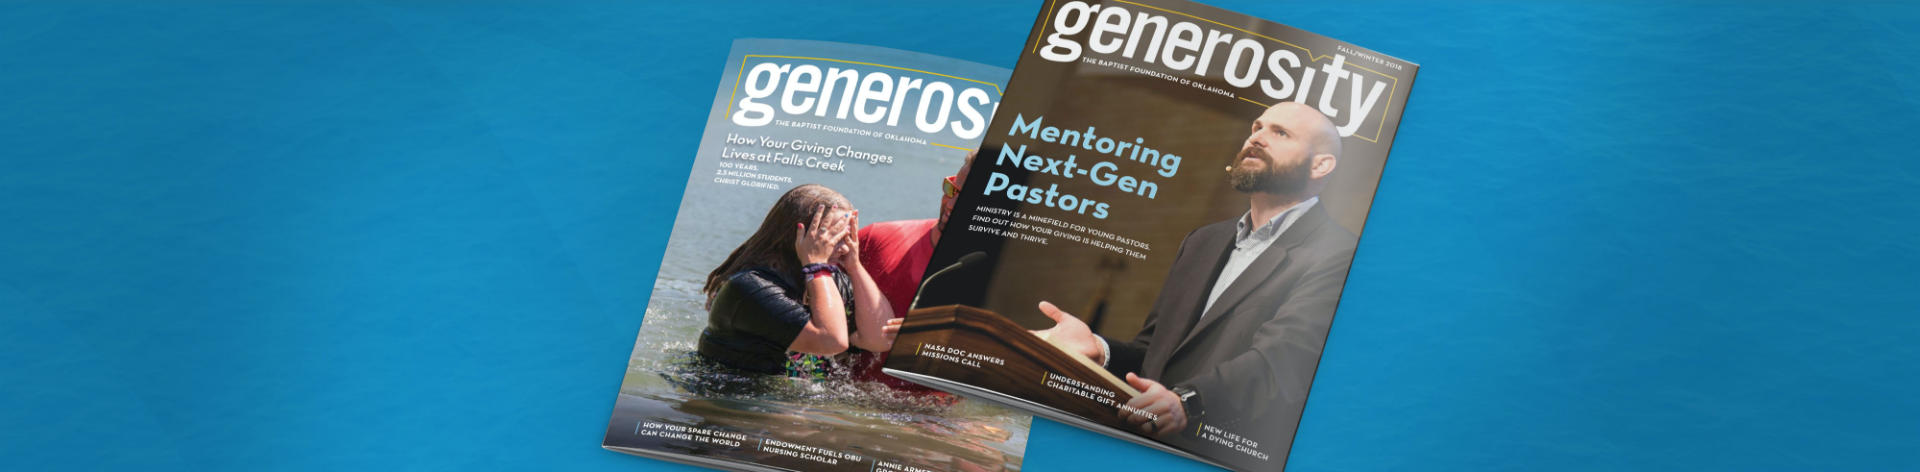 Generosity Magazine